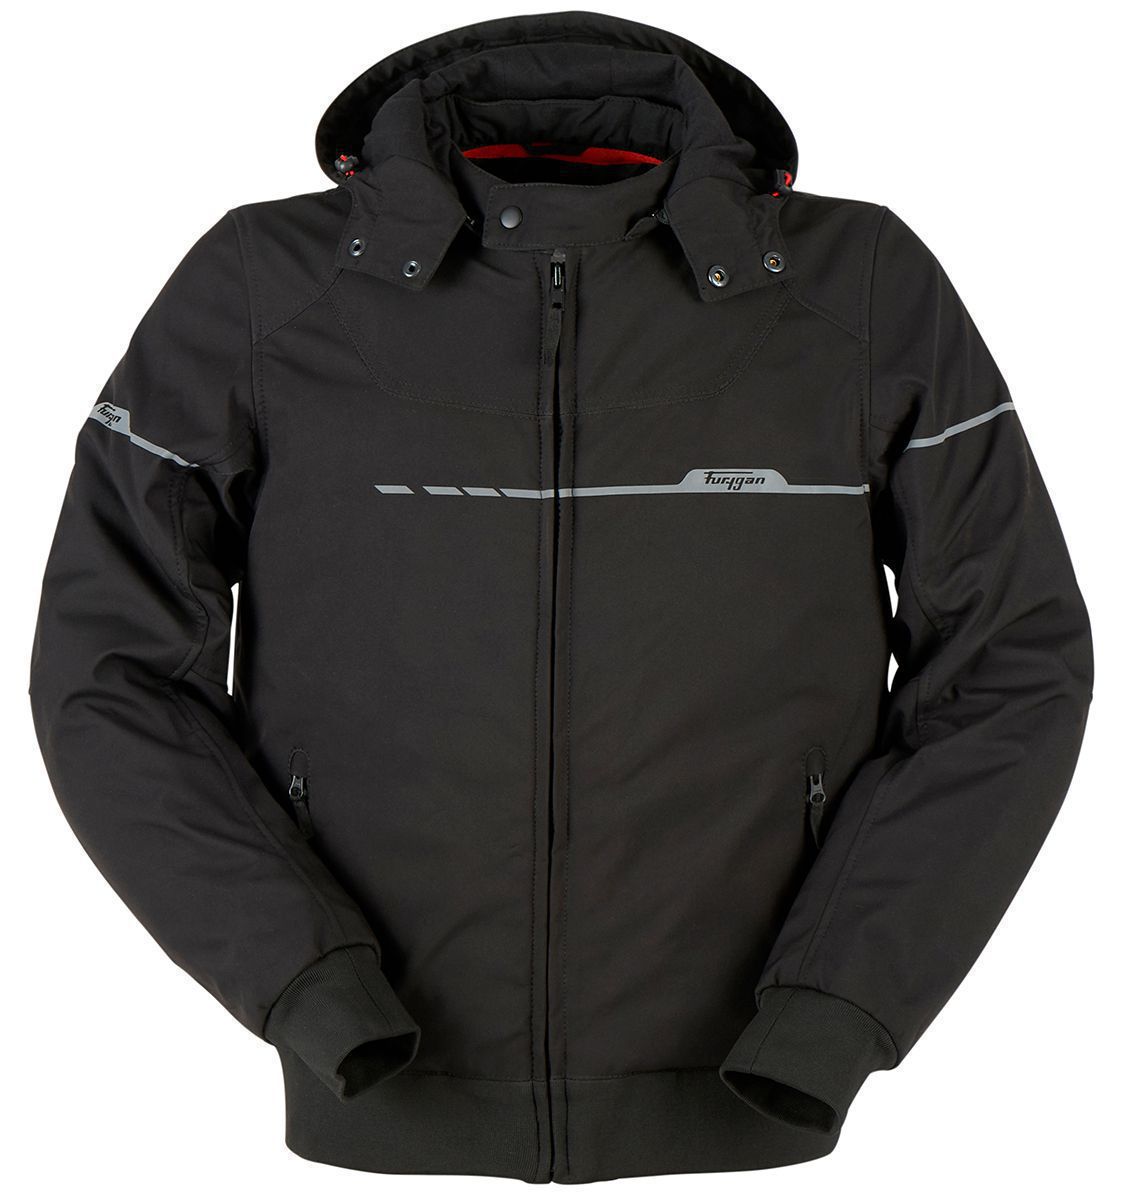 Image of Furygan Sektor Evo Jacket Black Size XL ID 3435980335069